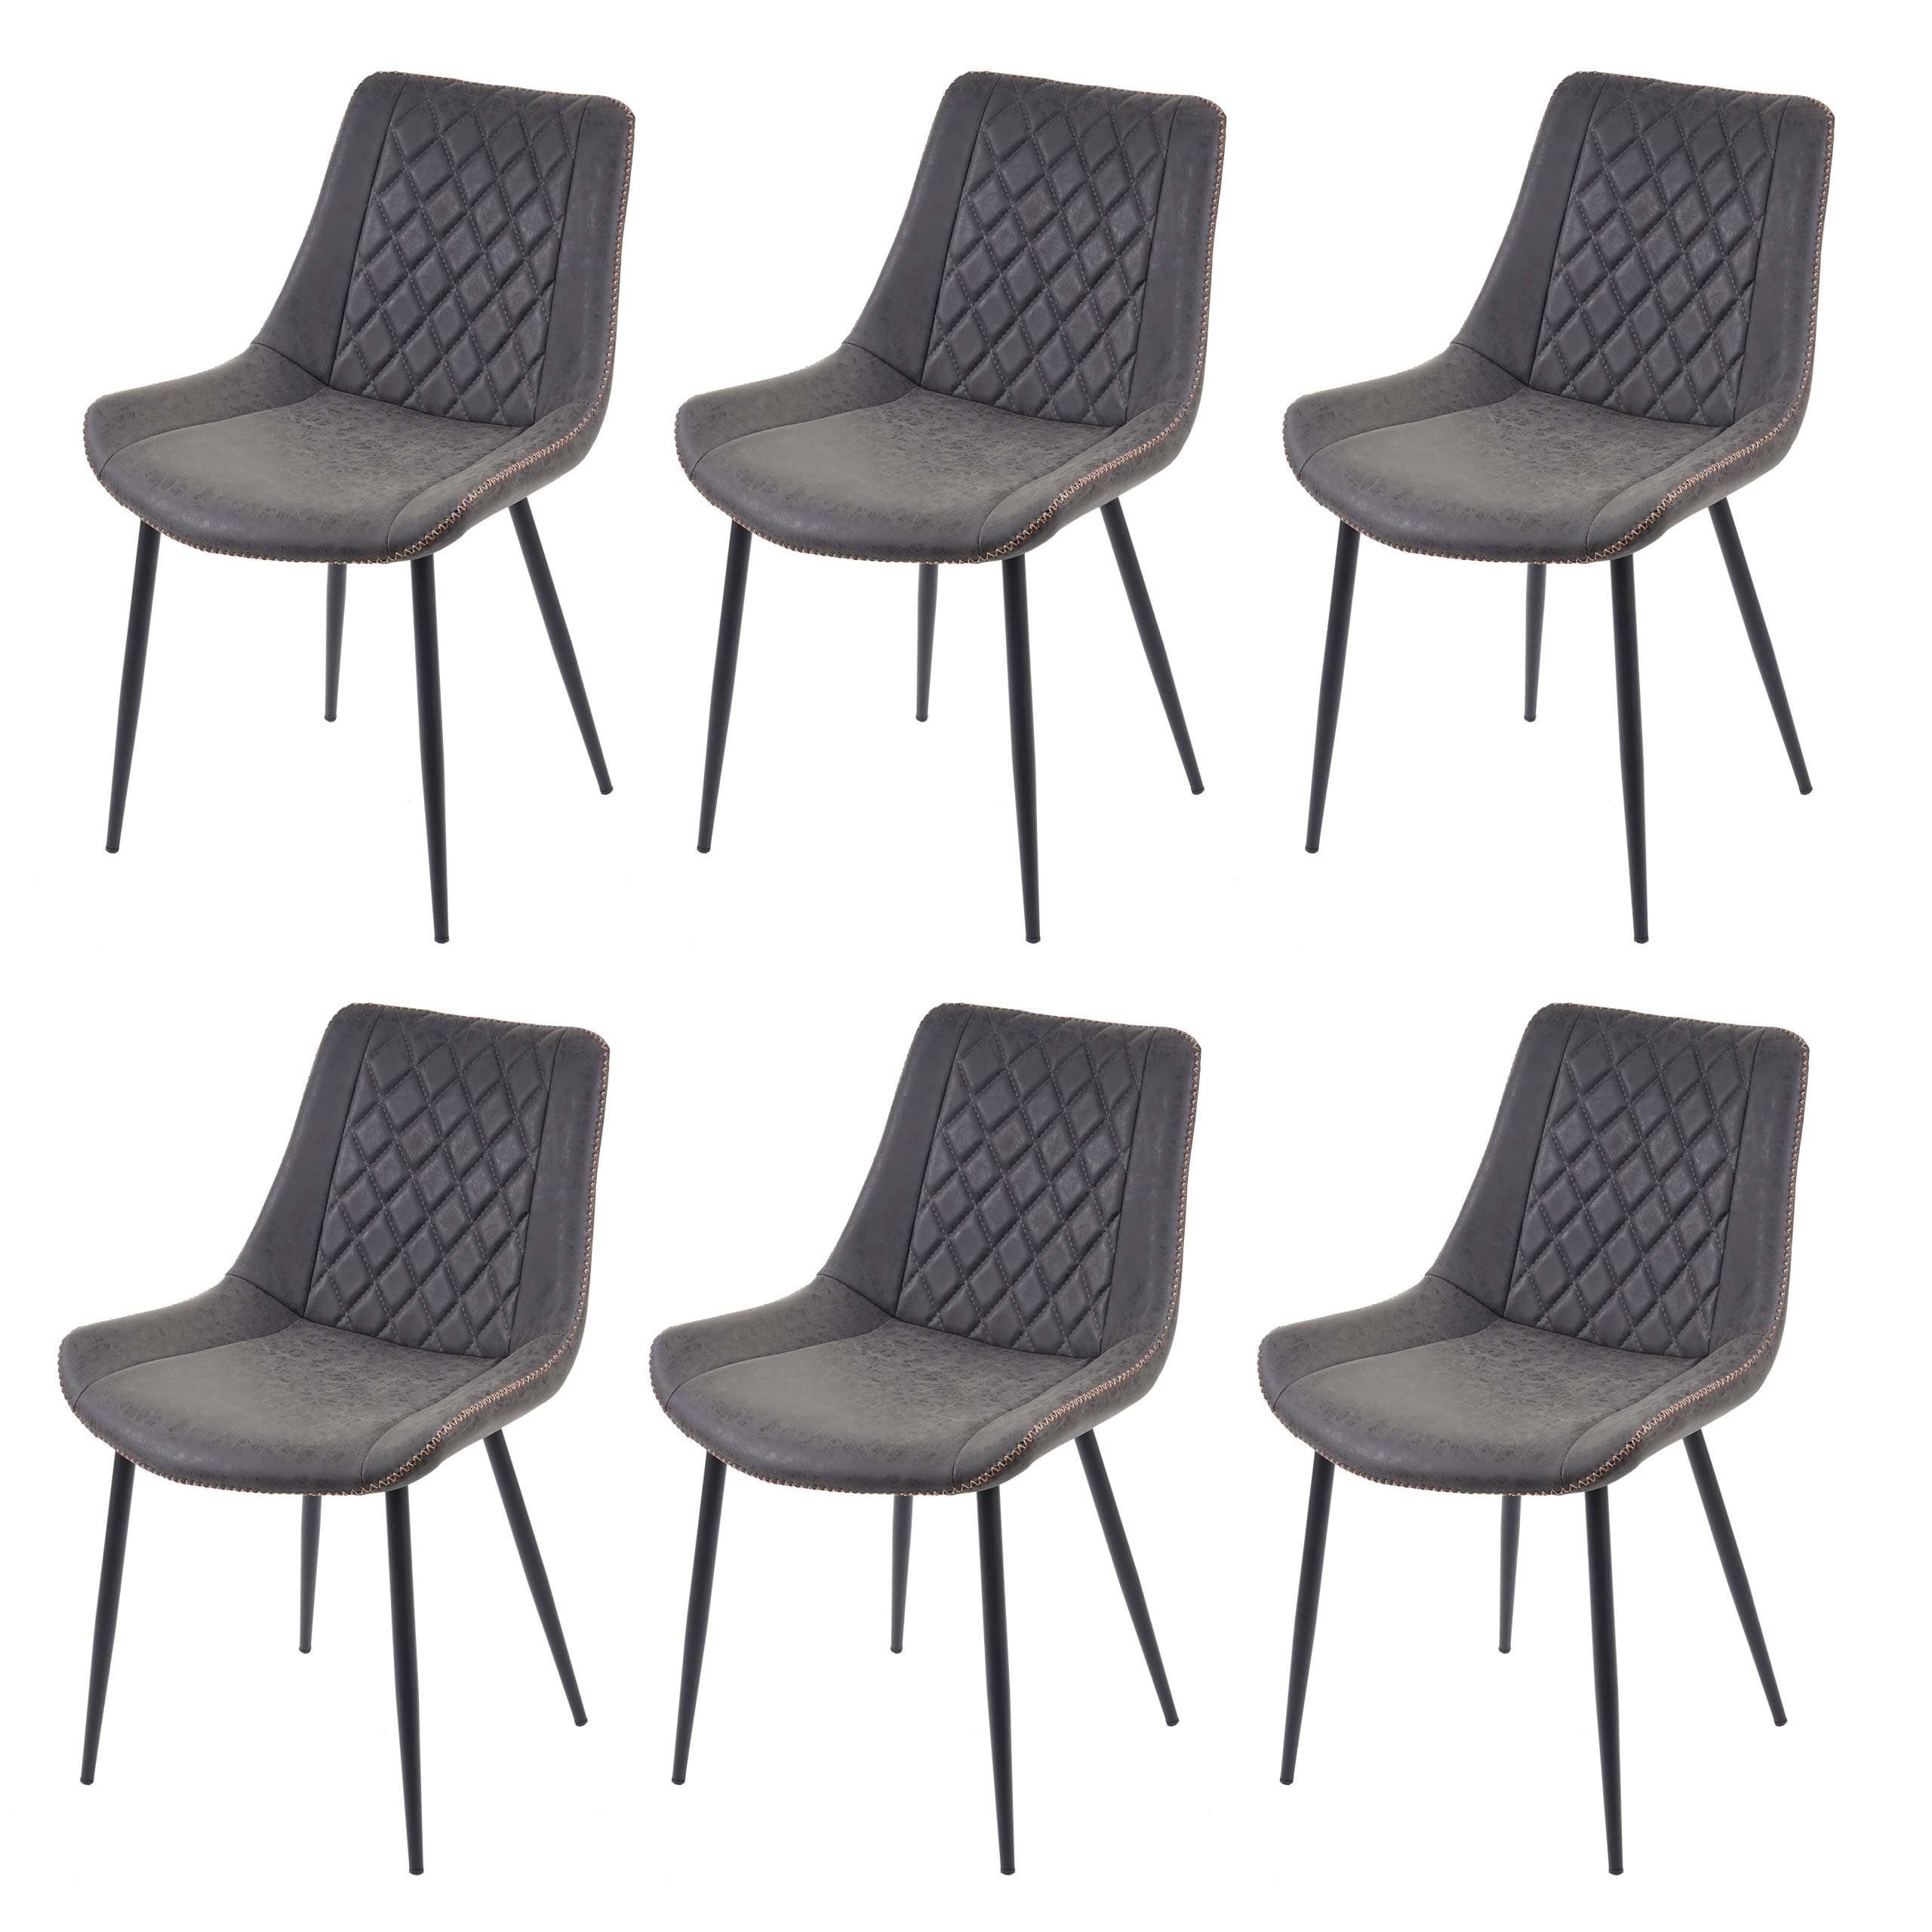 MCW Esszimmerstuhl MCW-E56-6 (Set, 6 St), 6er-Set, Inklusive Fußbodenschoner, dekorative glänzende Ziernaht wildlederimitat dunkelgrau | grau | Stühle